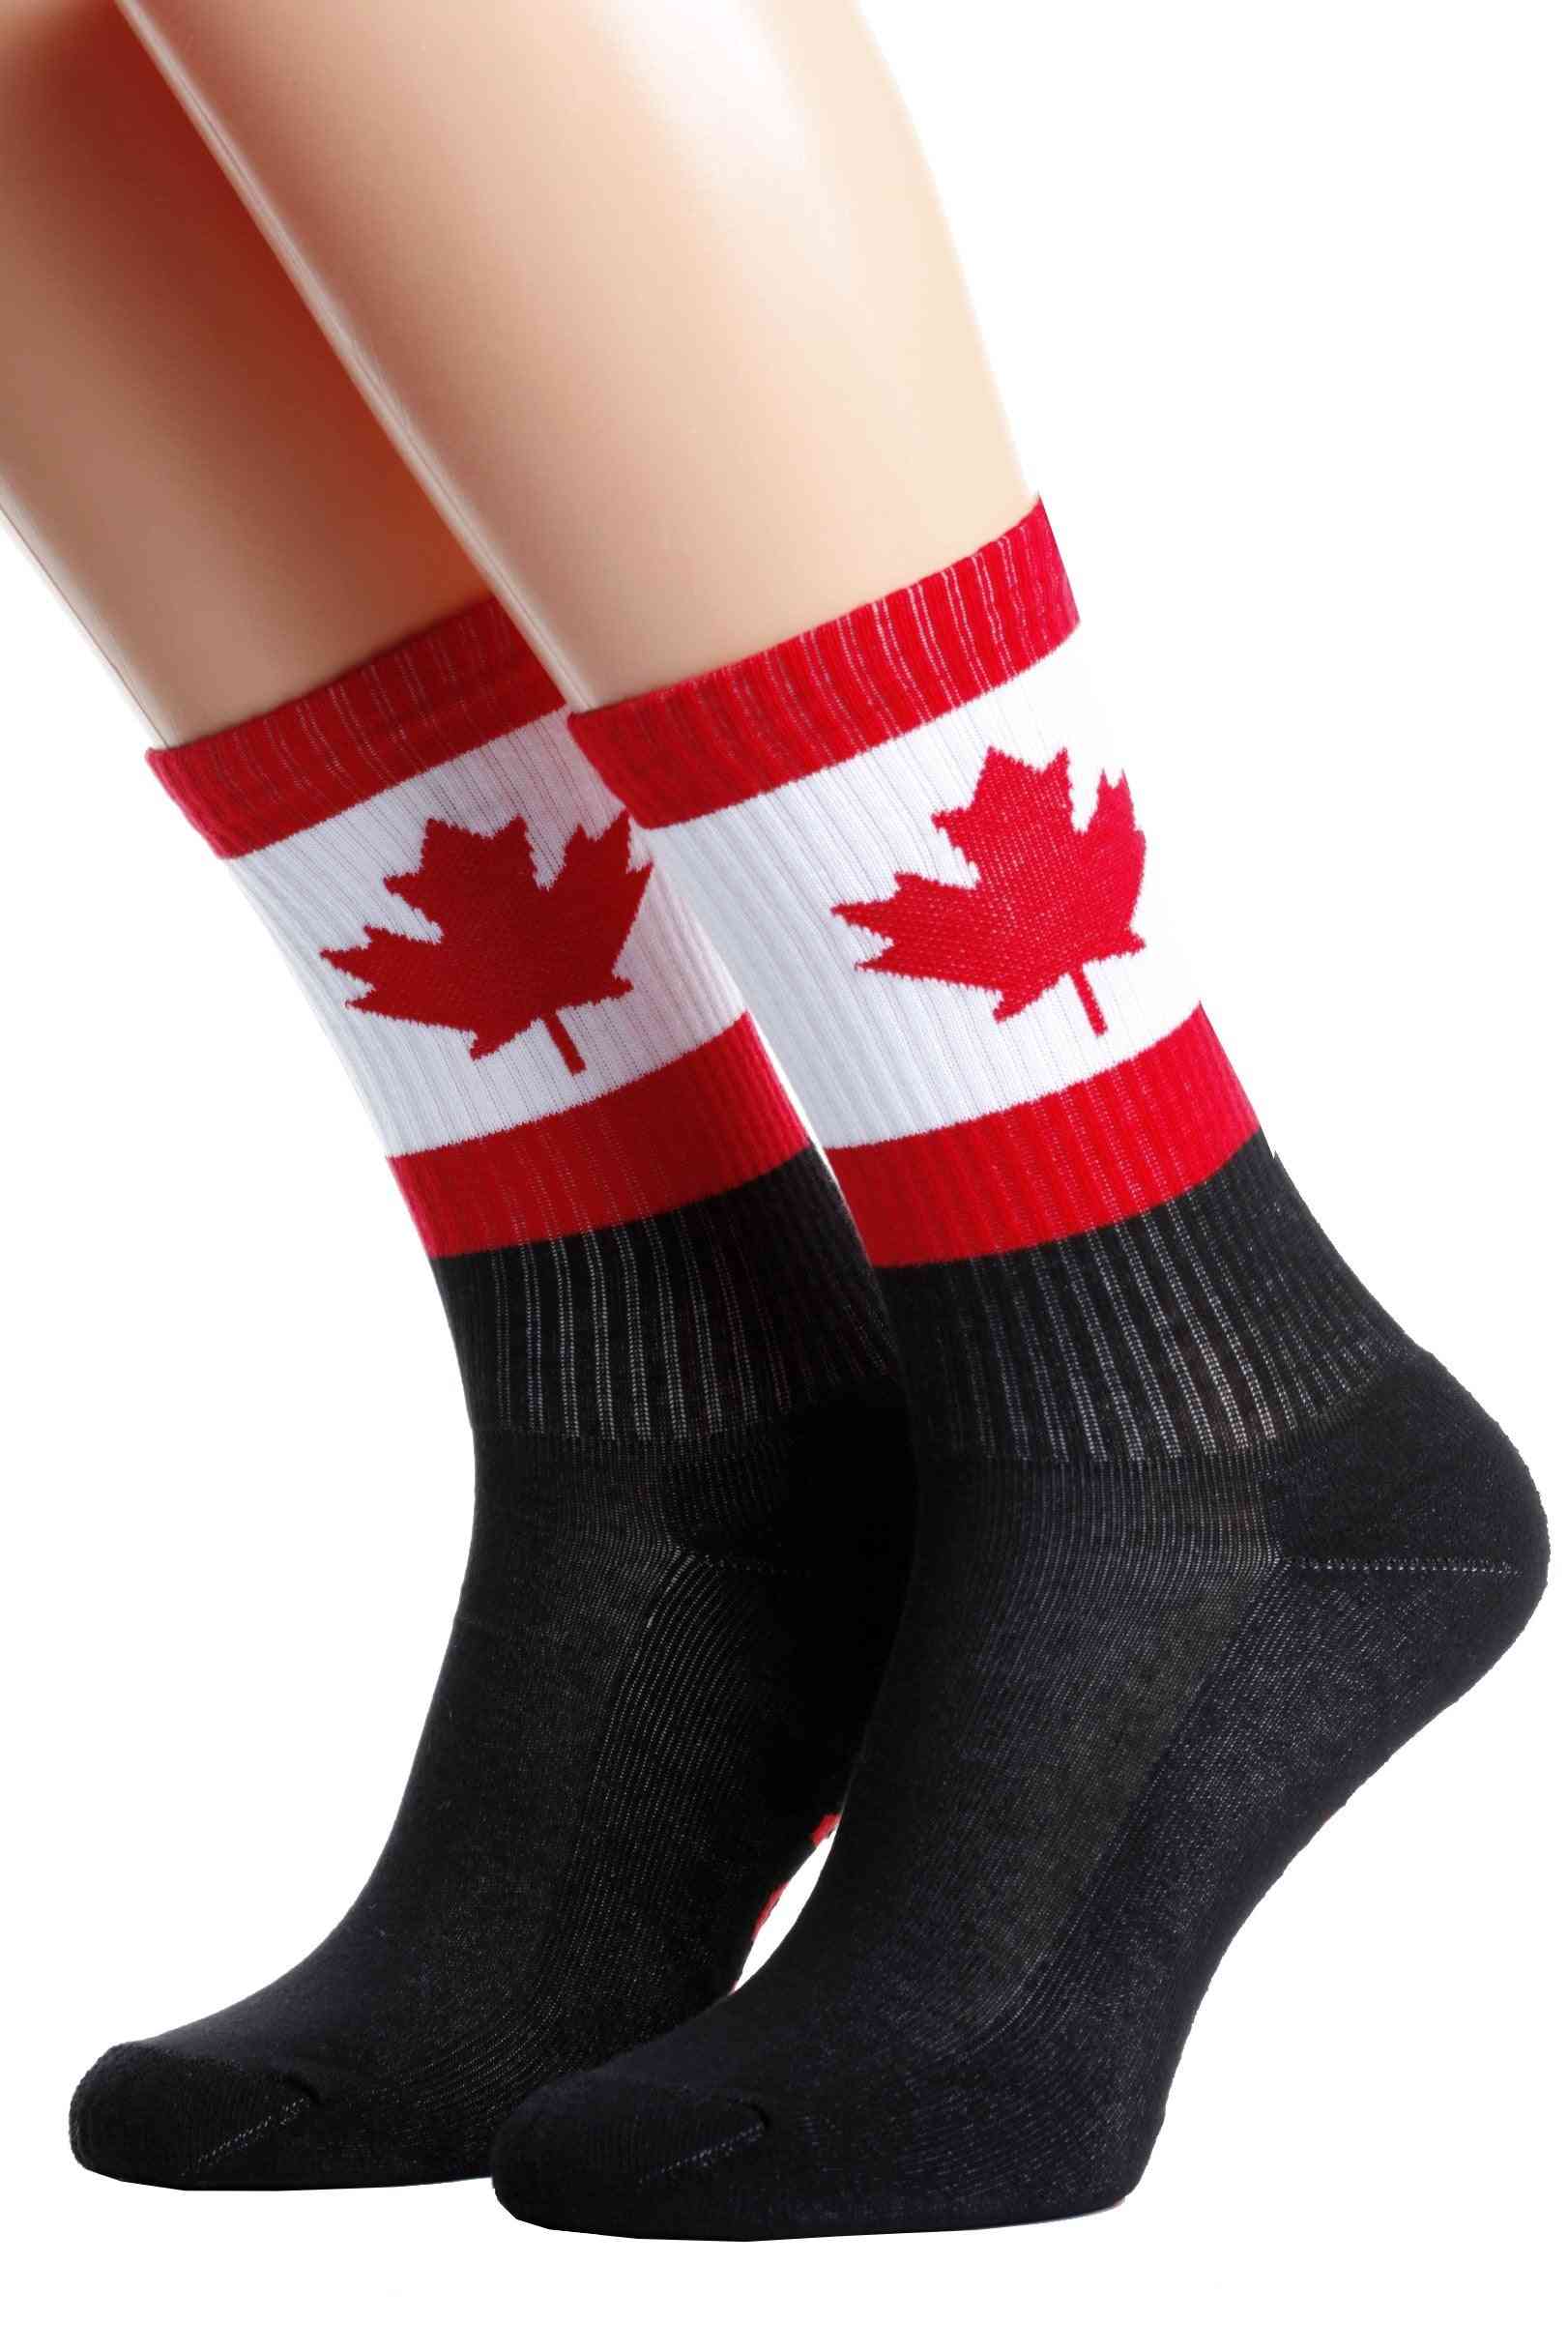 Canadian Flag Knit Socks